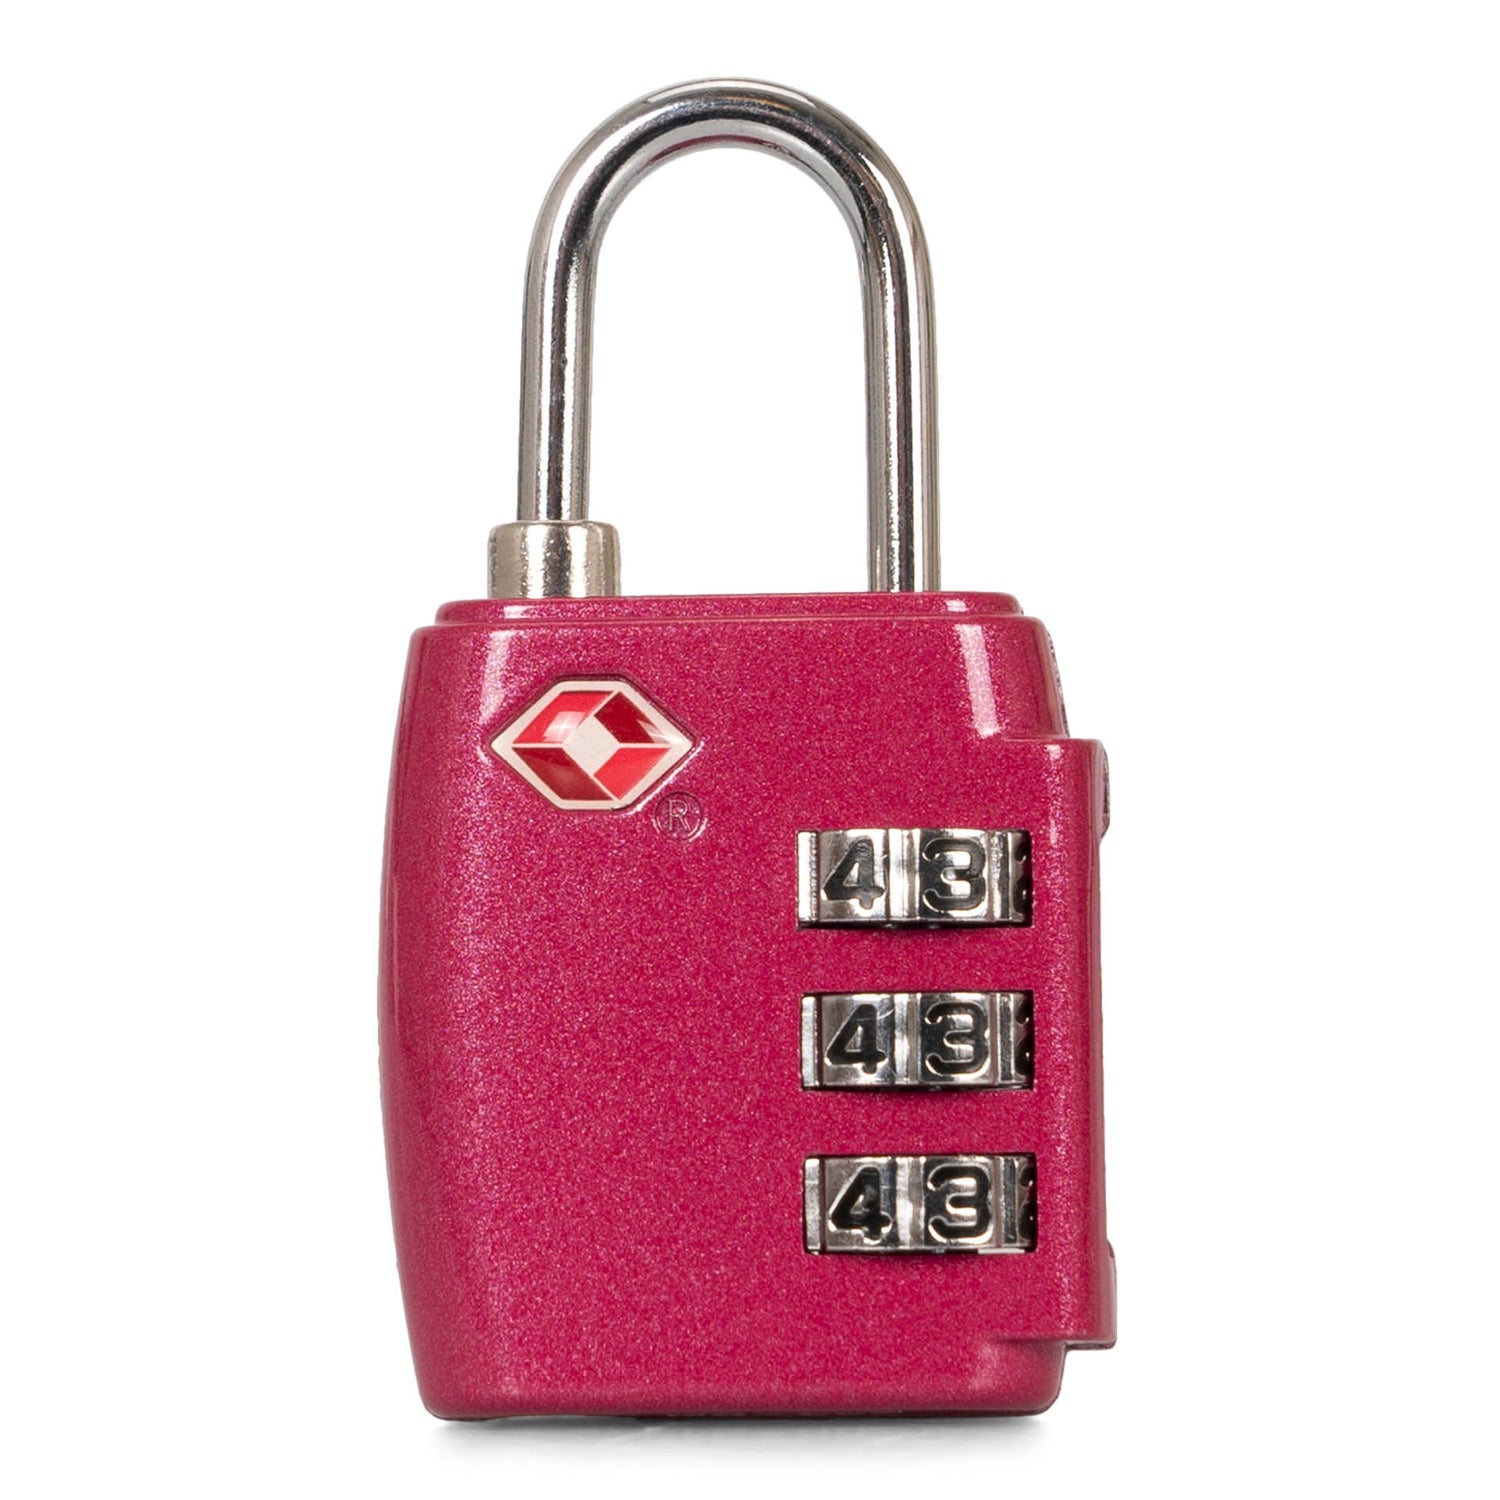 TSA Combination Lock - Bentley